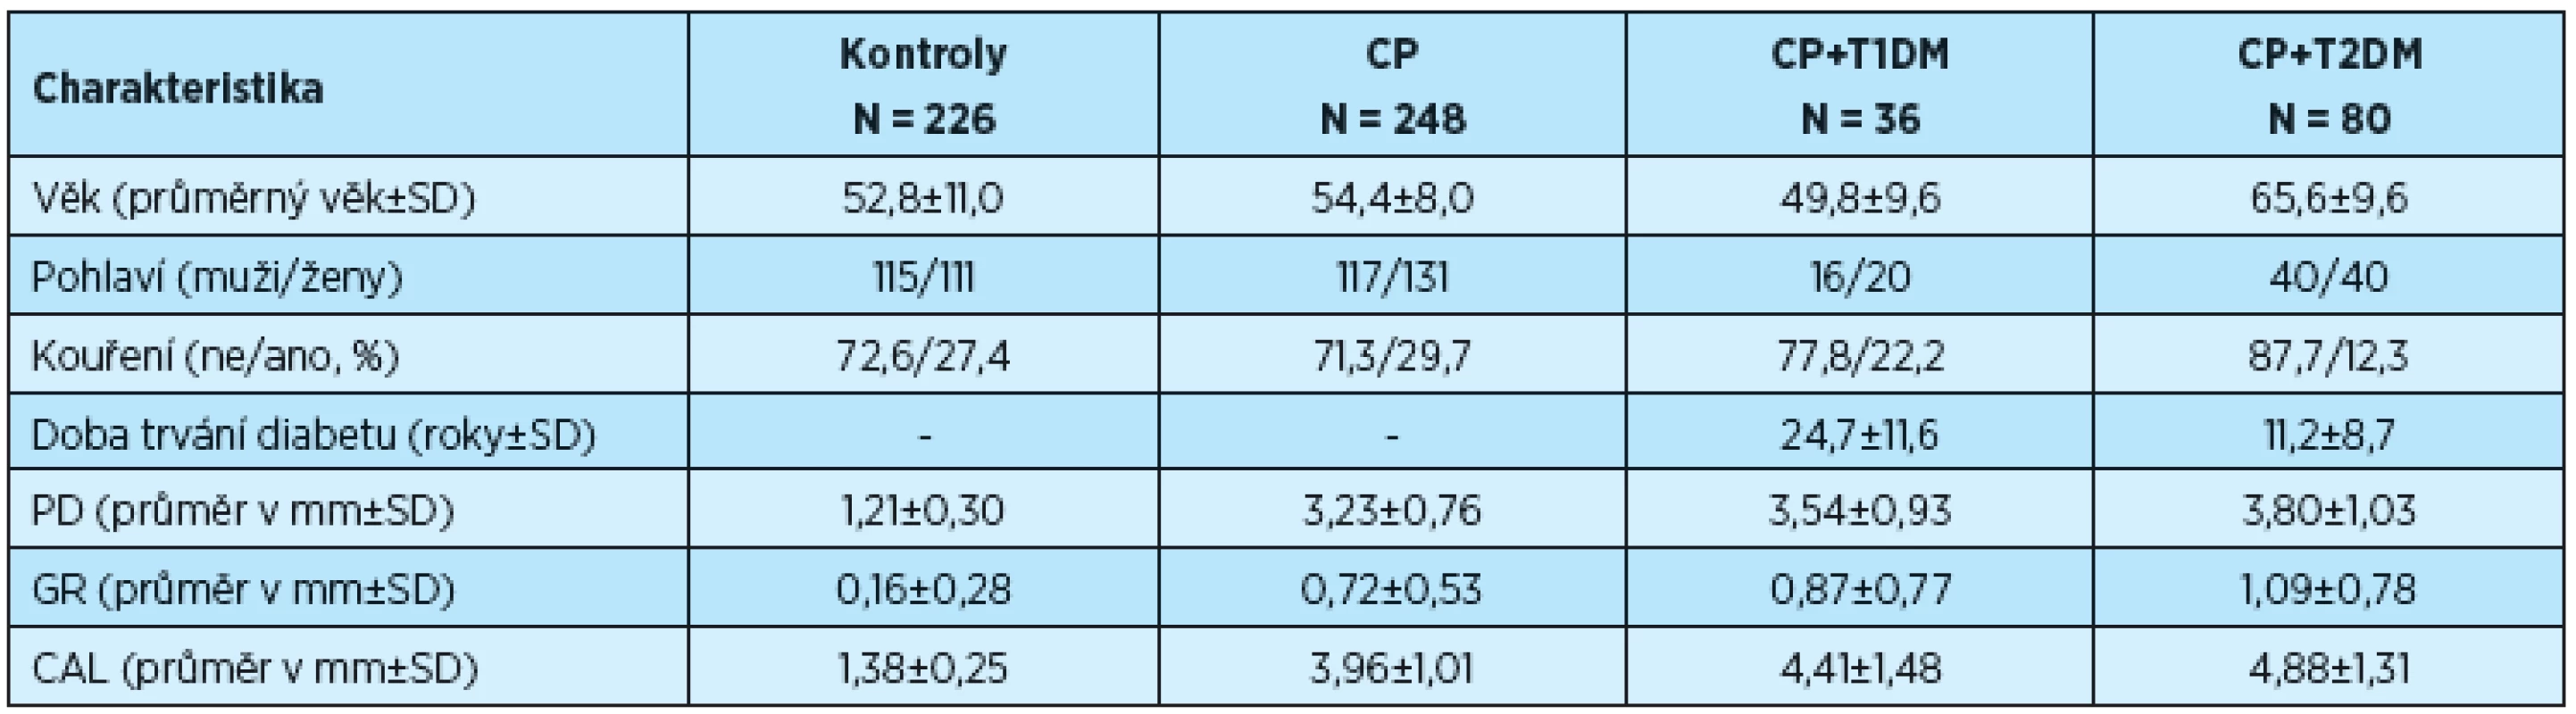 Demografická a klinická data pacientů s CP, CP+T1DM, CP+T2DM a kontrolních osob